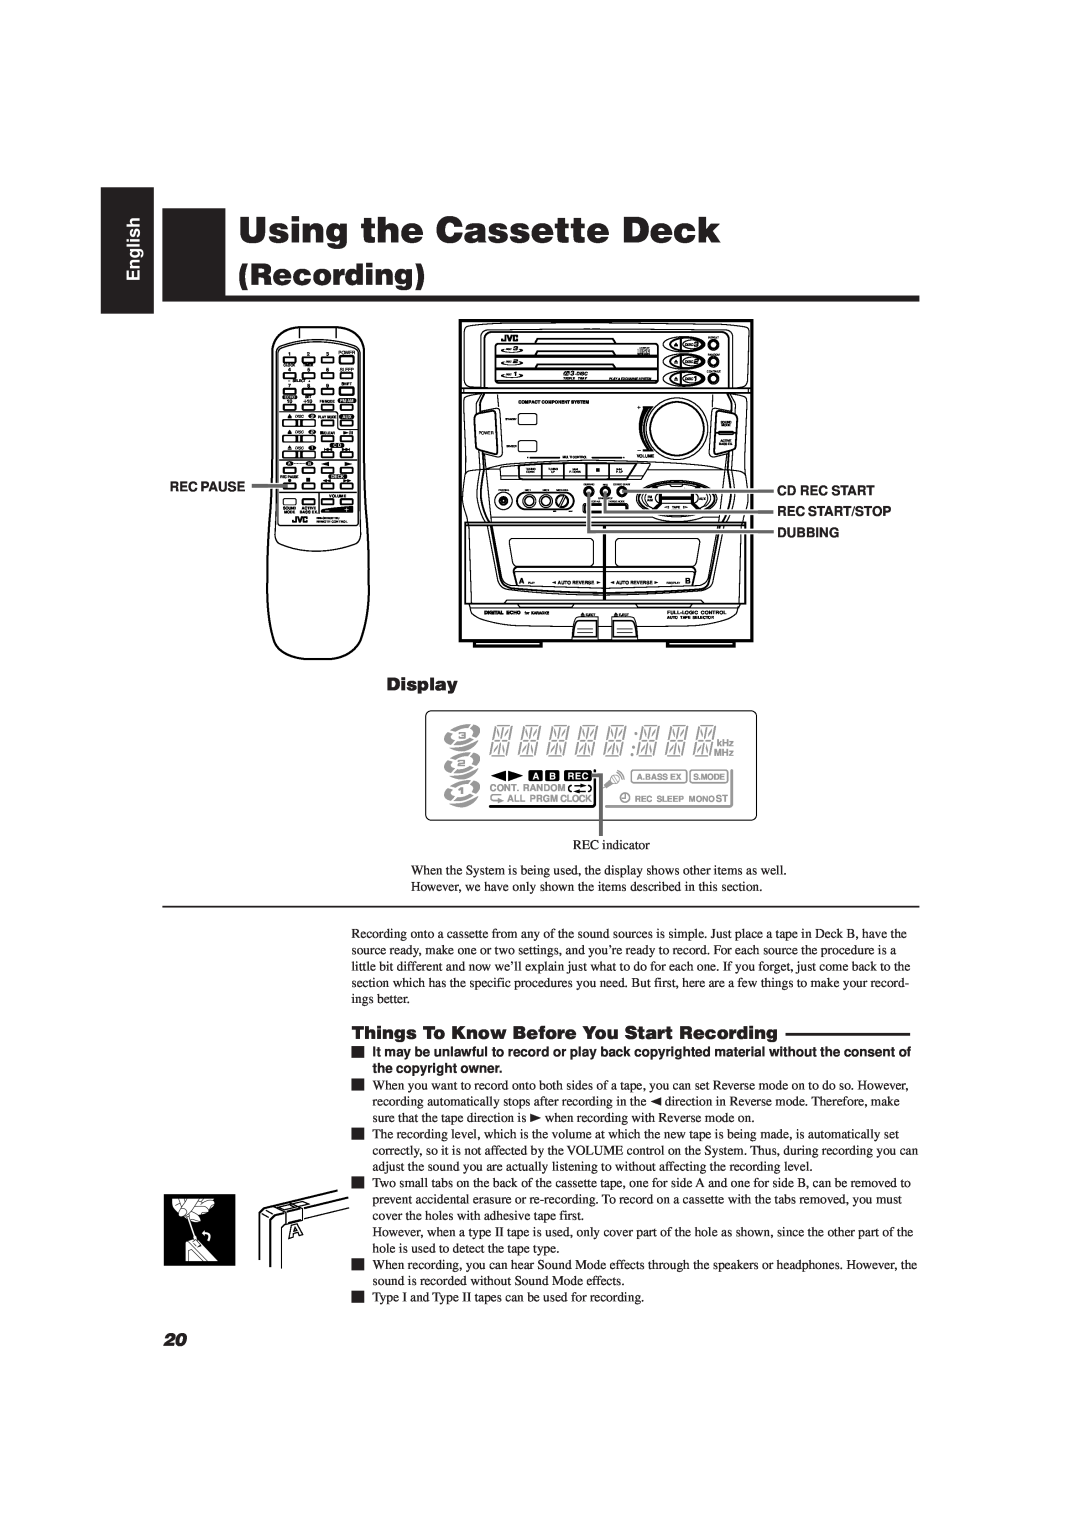 JVC MX-D401T, CA-D501T manual Recording, Using the Cassette Deck, English, Rec Pause, Cd Rec Start Rec Start/Stop Dubbing 